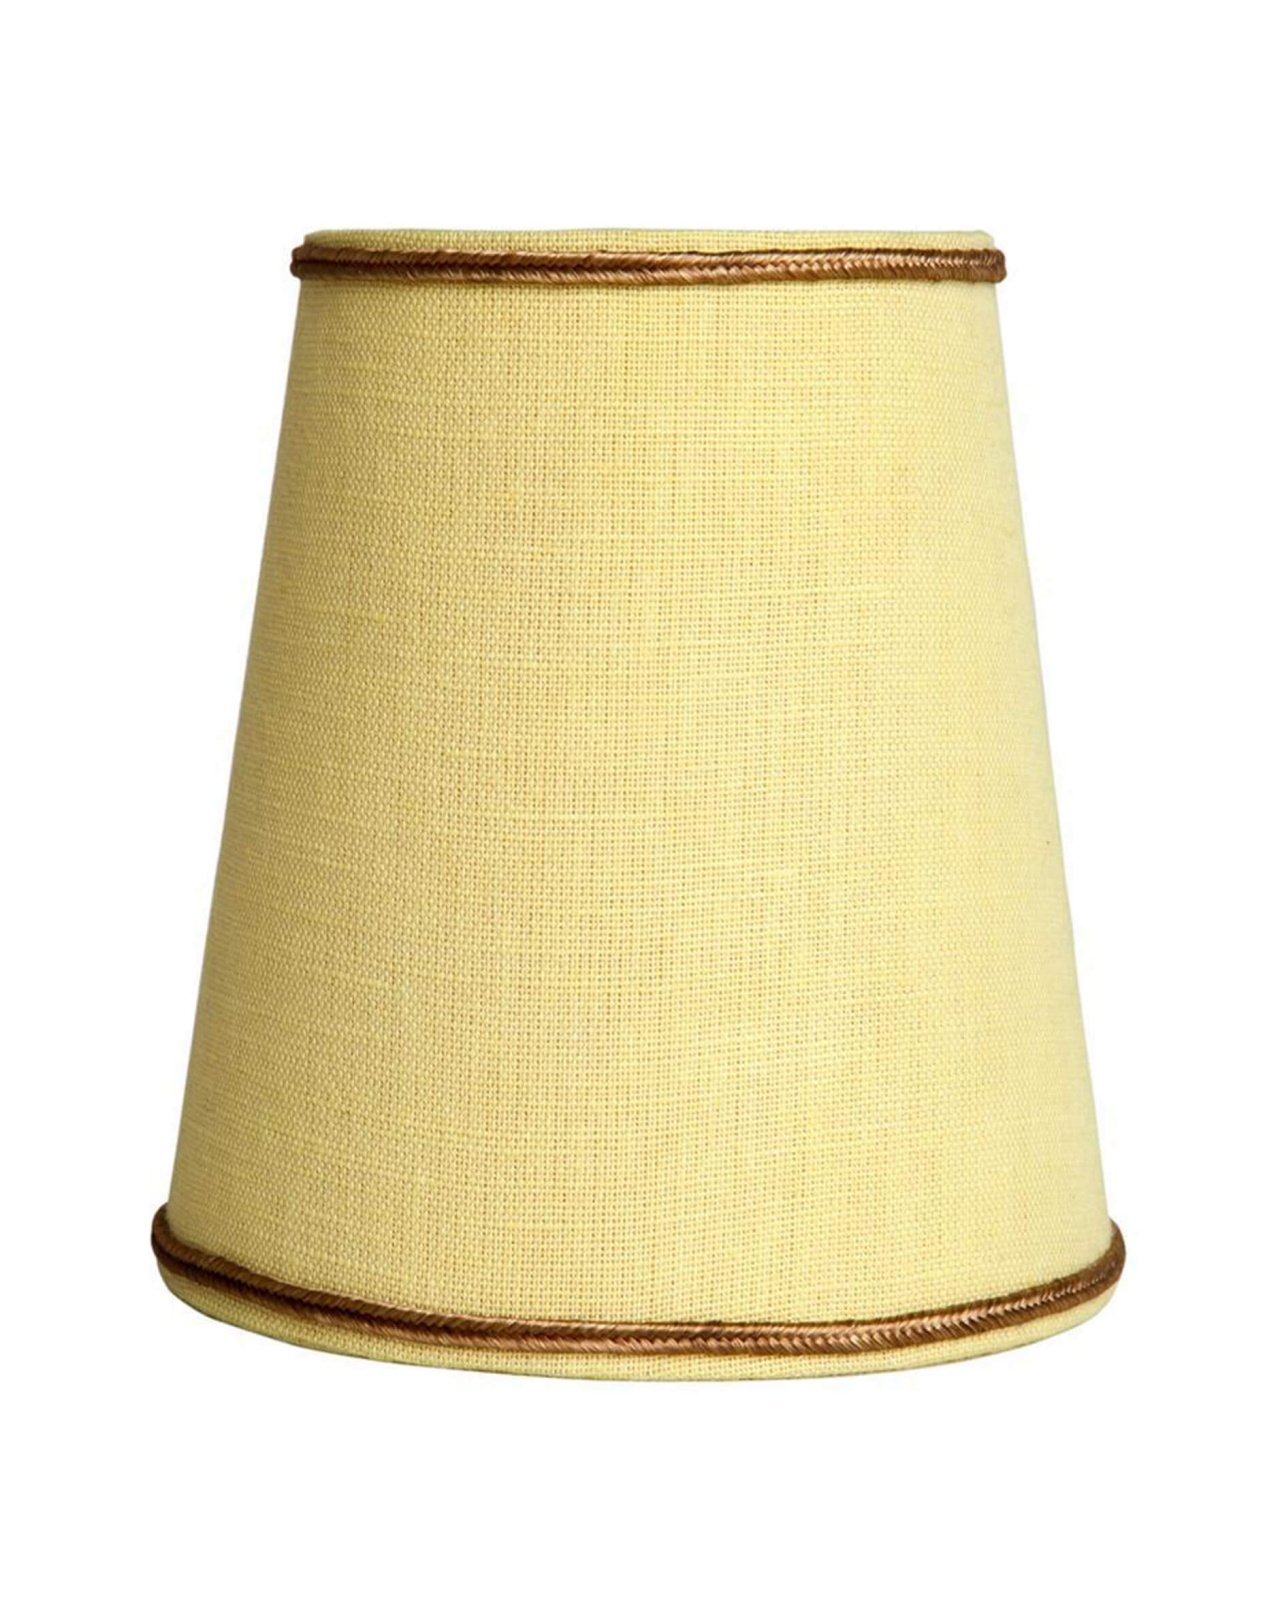 Barozzi lampshade mini yellow OUTLET